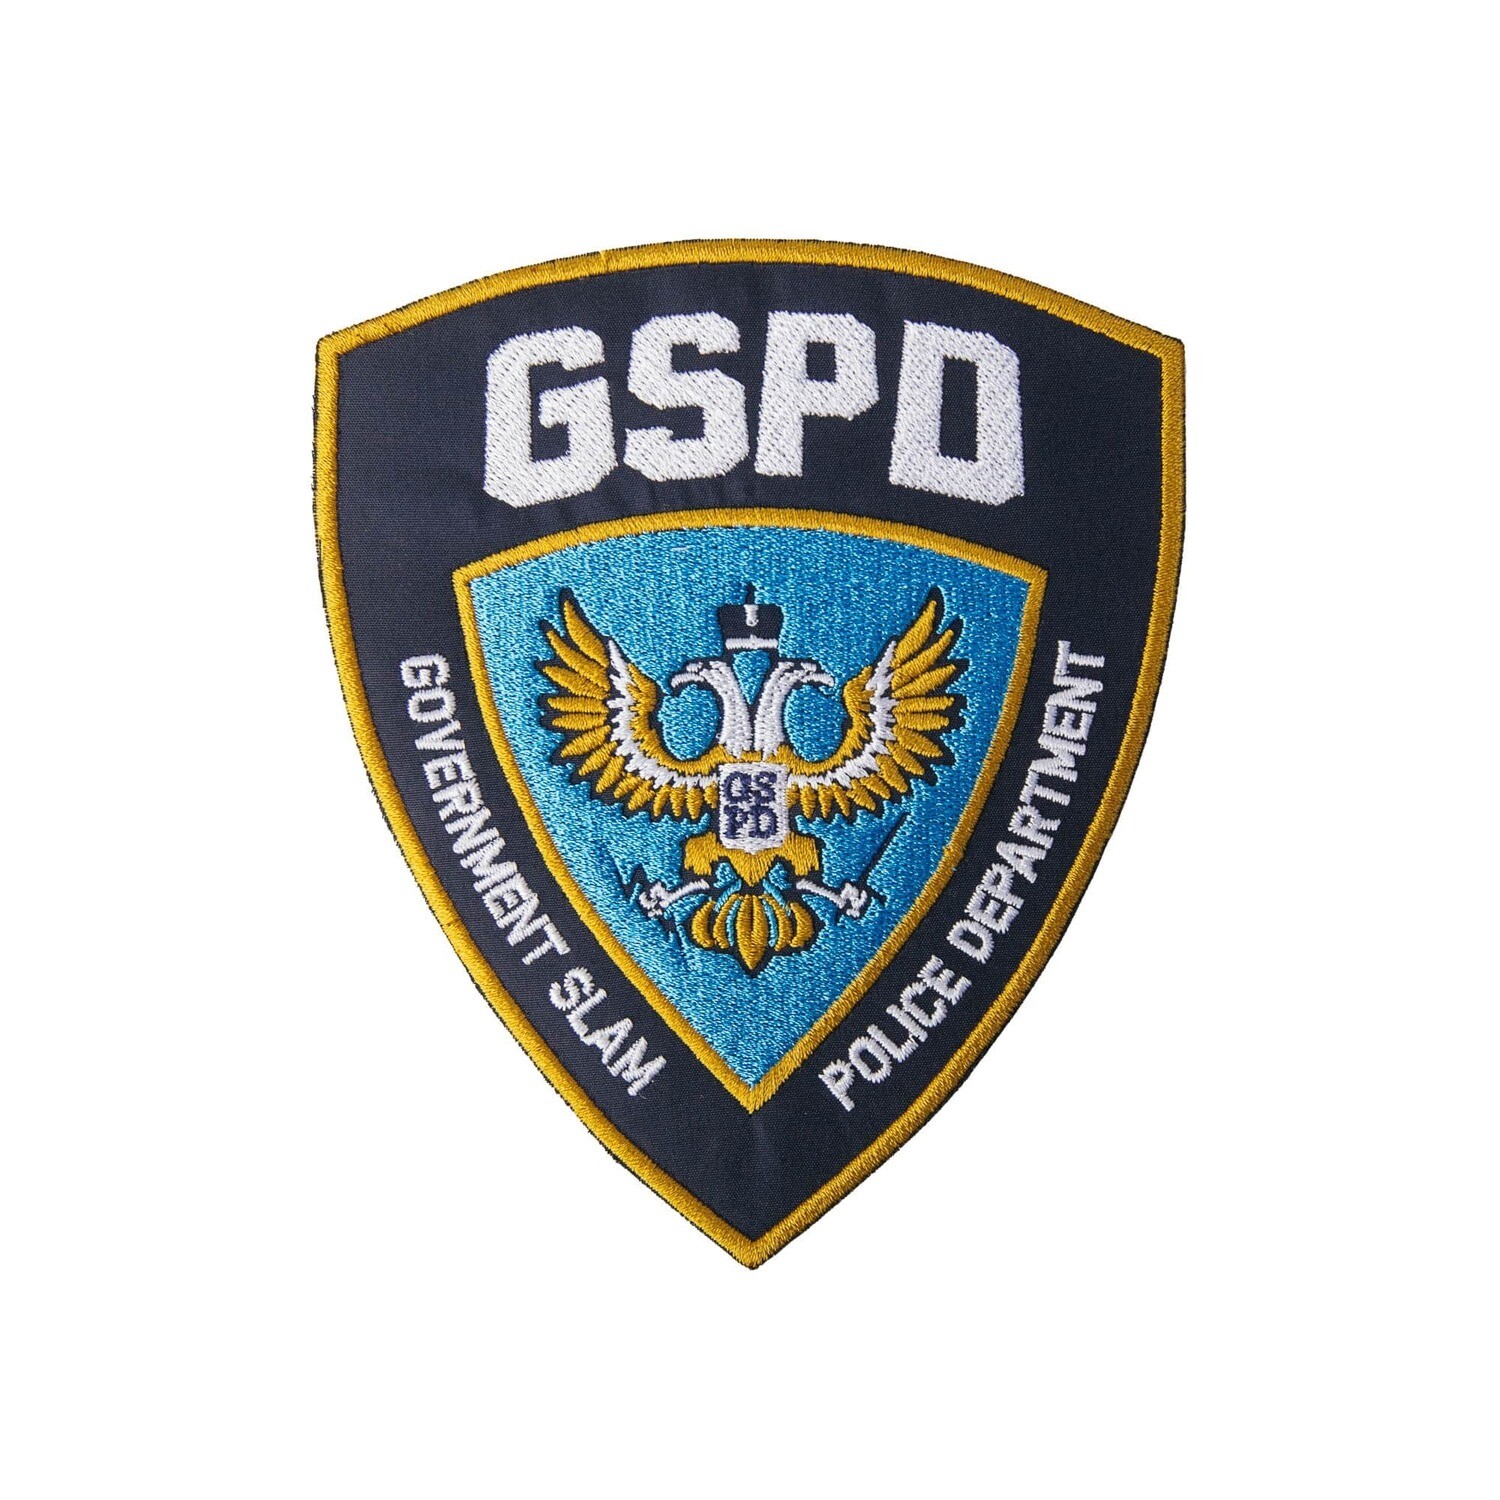 Шеврон "Police Department" от GSPD